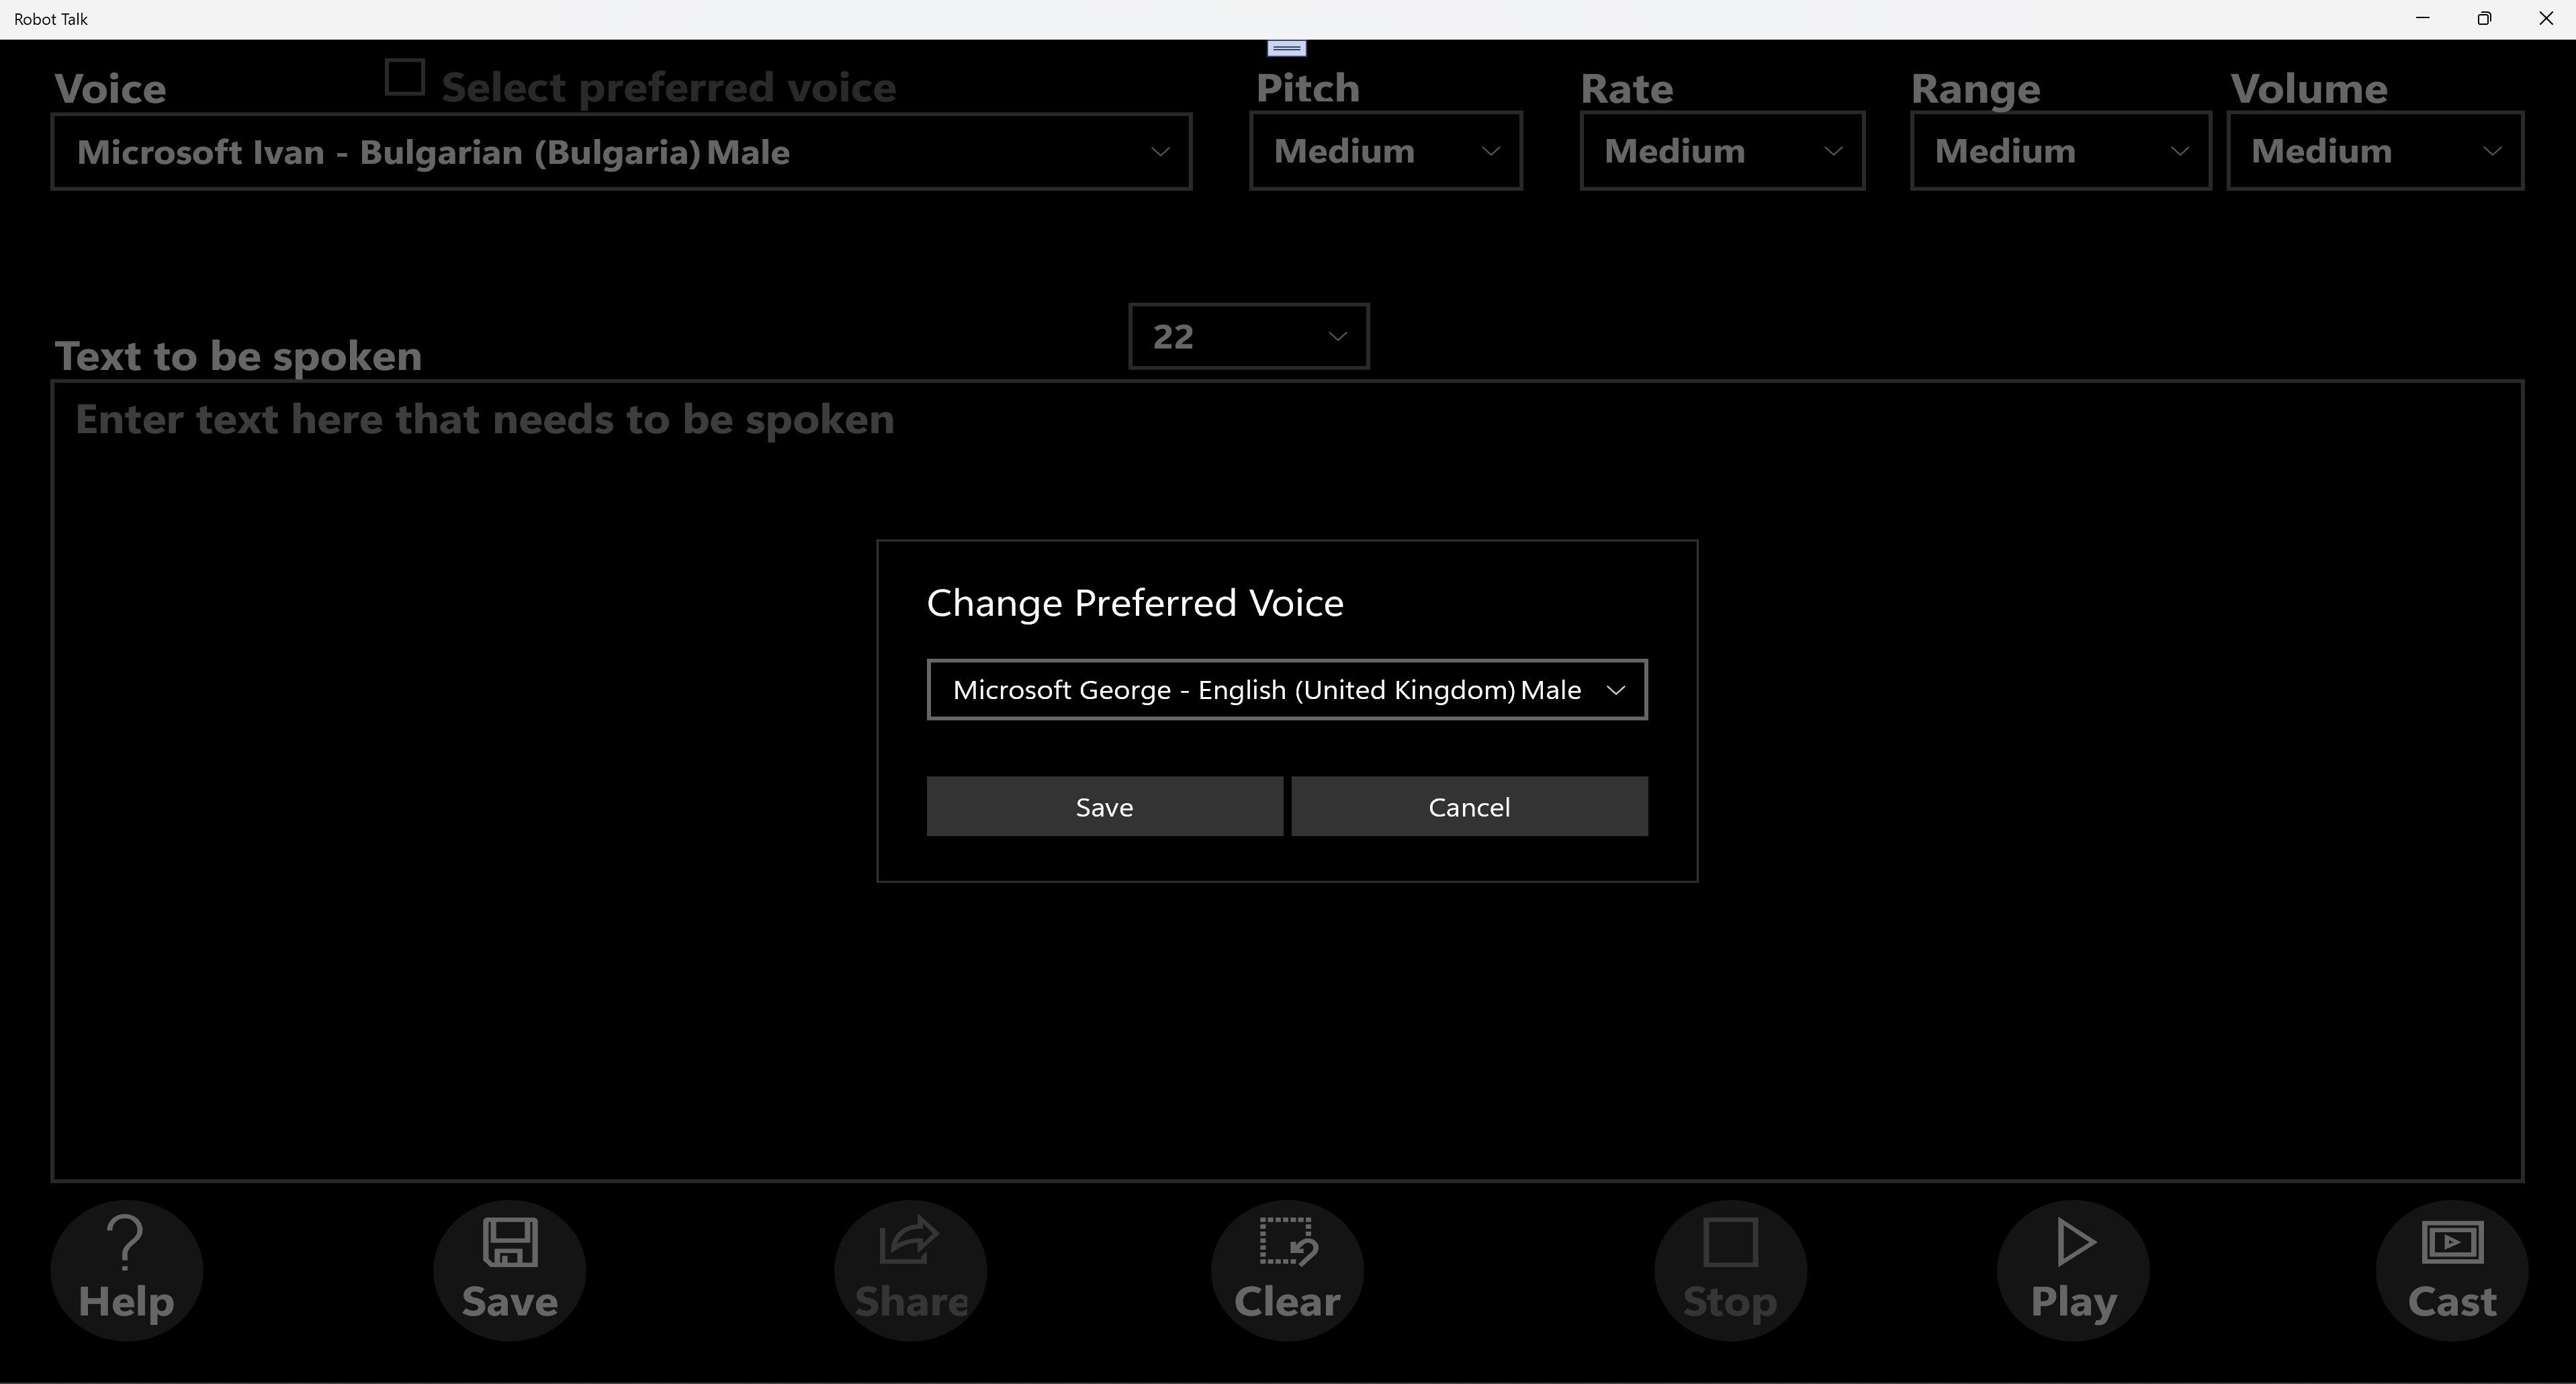 Main screen with change preferred voice dialog
(Dark Theme)